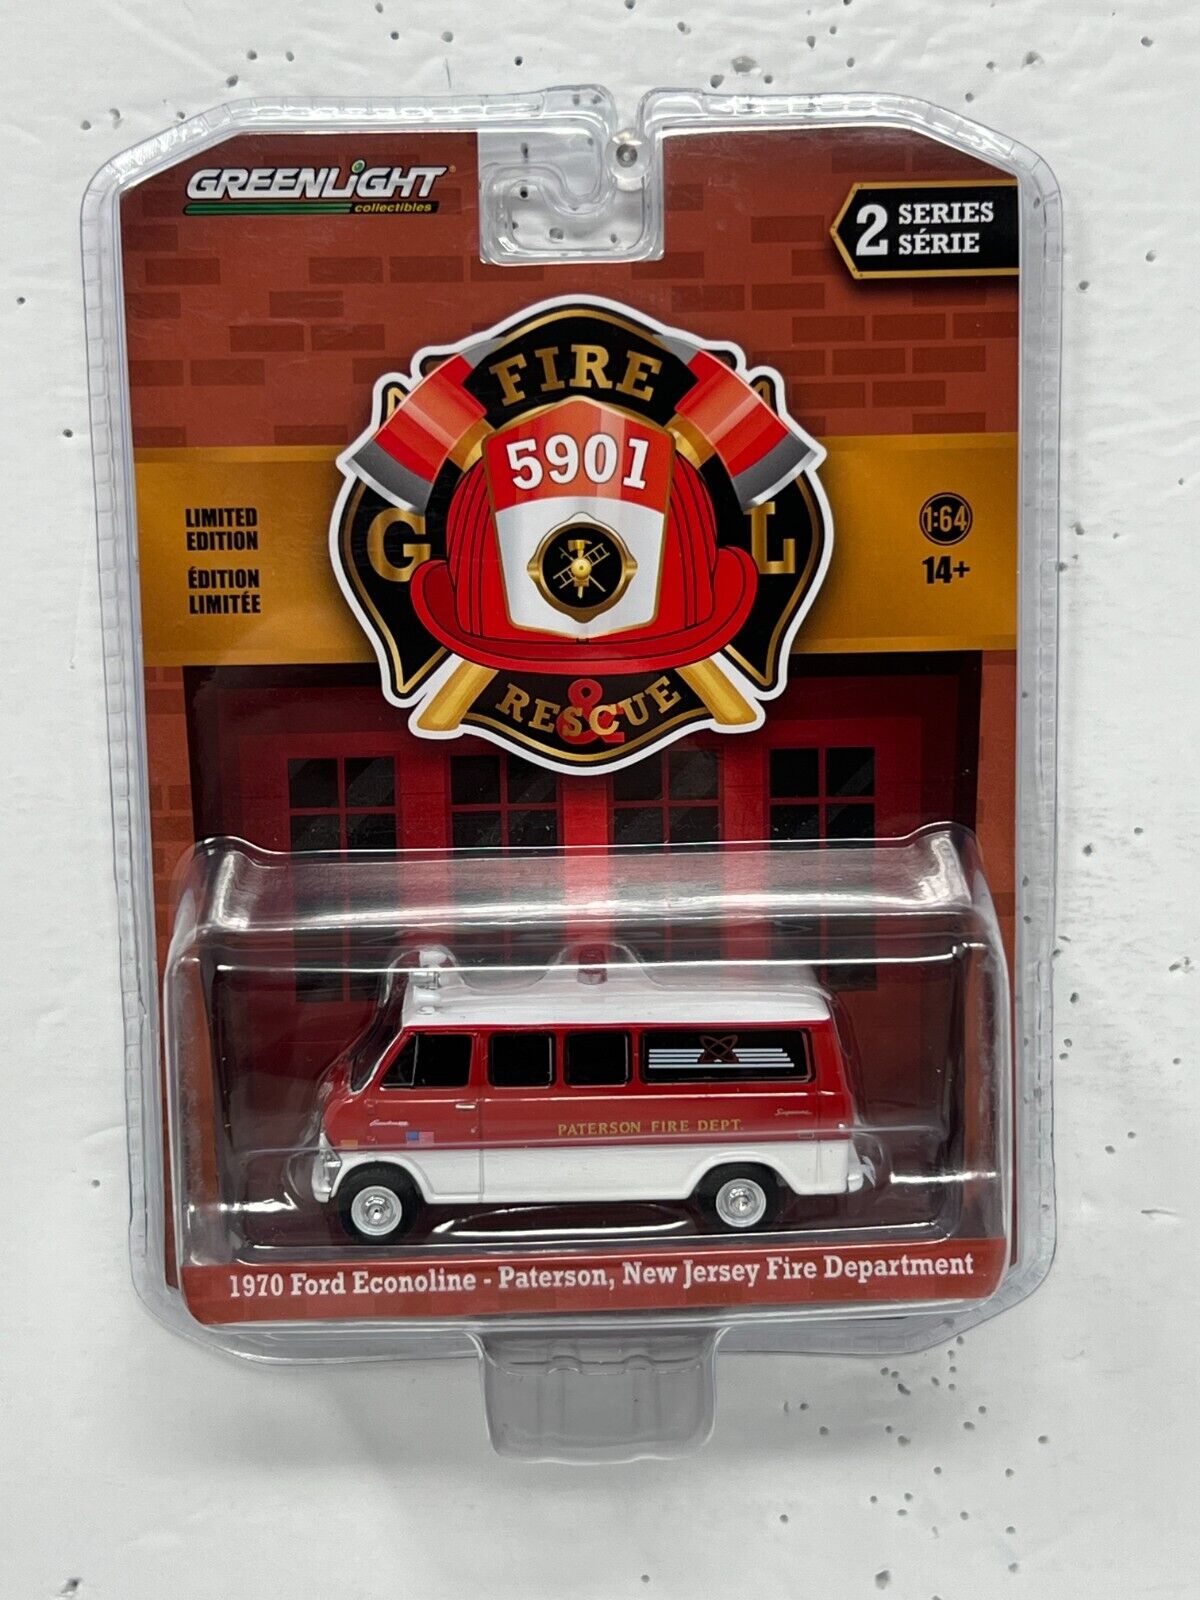 Greenlight Fire & Rescue 1970 Ford Econoline 1:64 Diecast